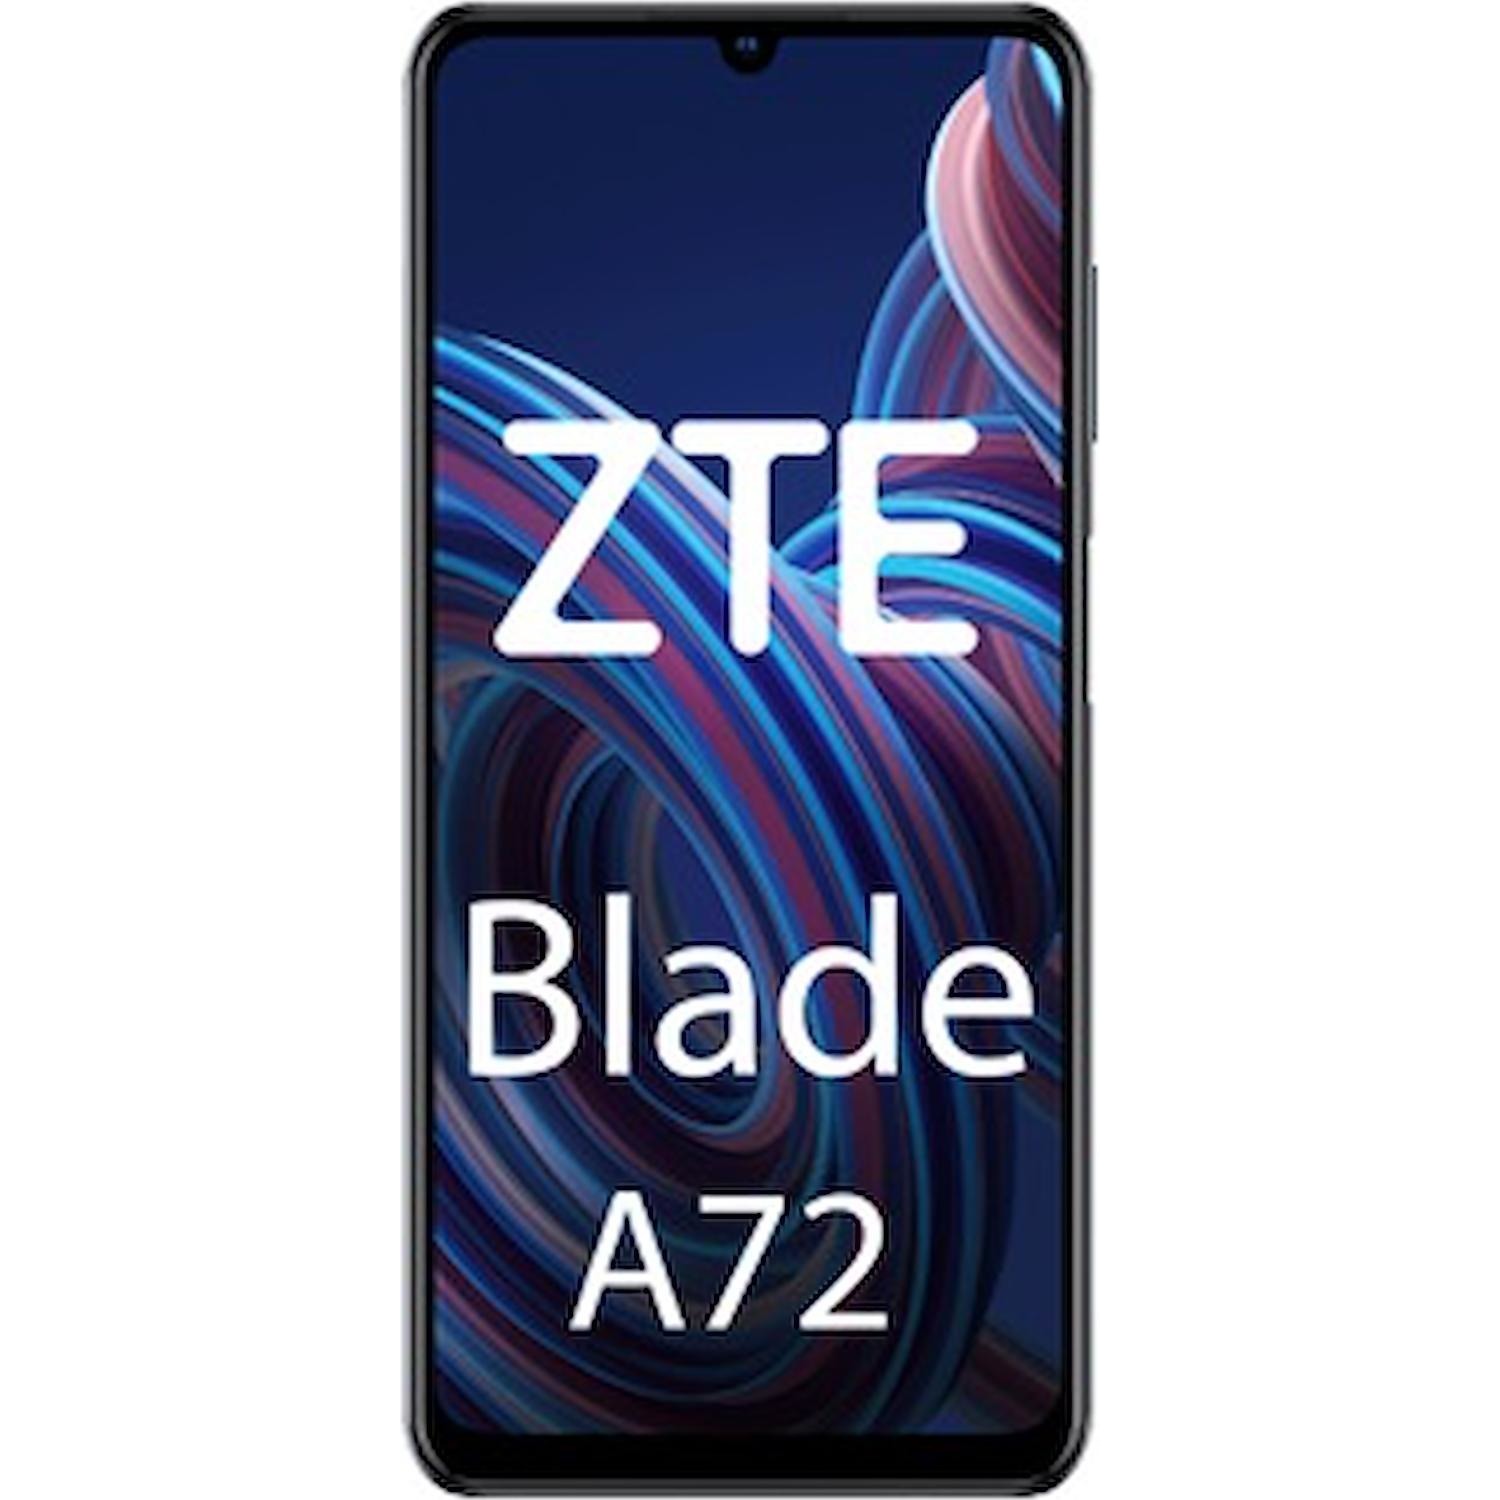 Immagine per Smartphone Wind3 ZTE Blade A72 5G grey grigio da DIMOStore